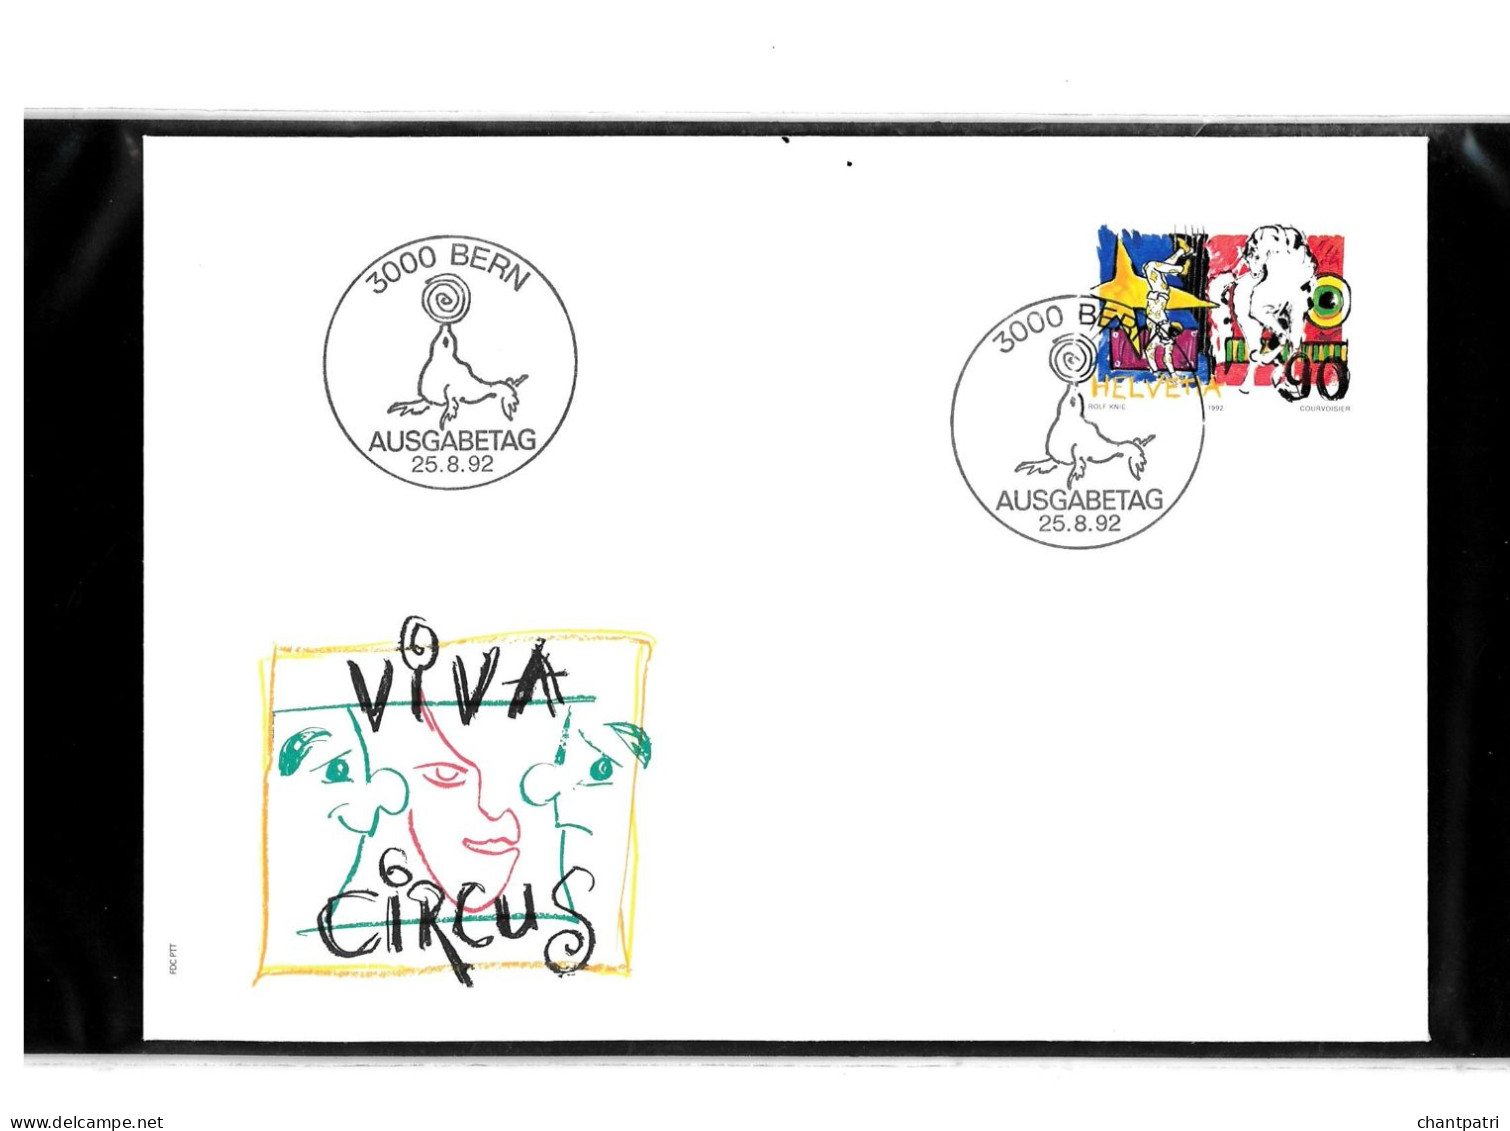 3000 Bern - Viva Circus - Ausgabetag - 25 08 1992 - Beli FDC 015 - Covers & Documents